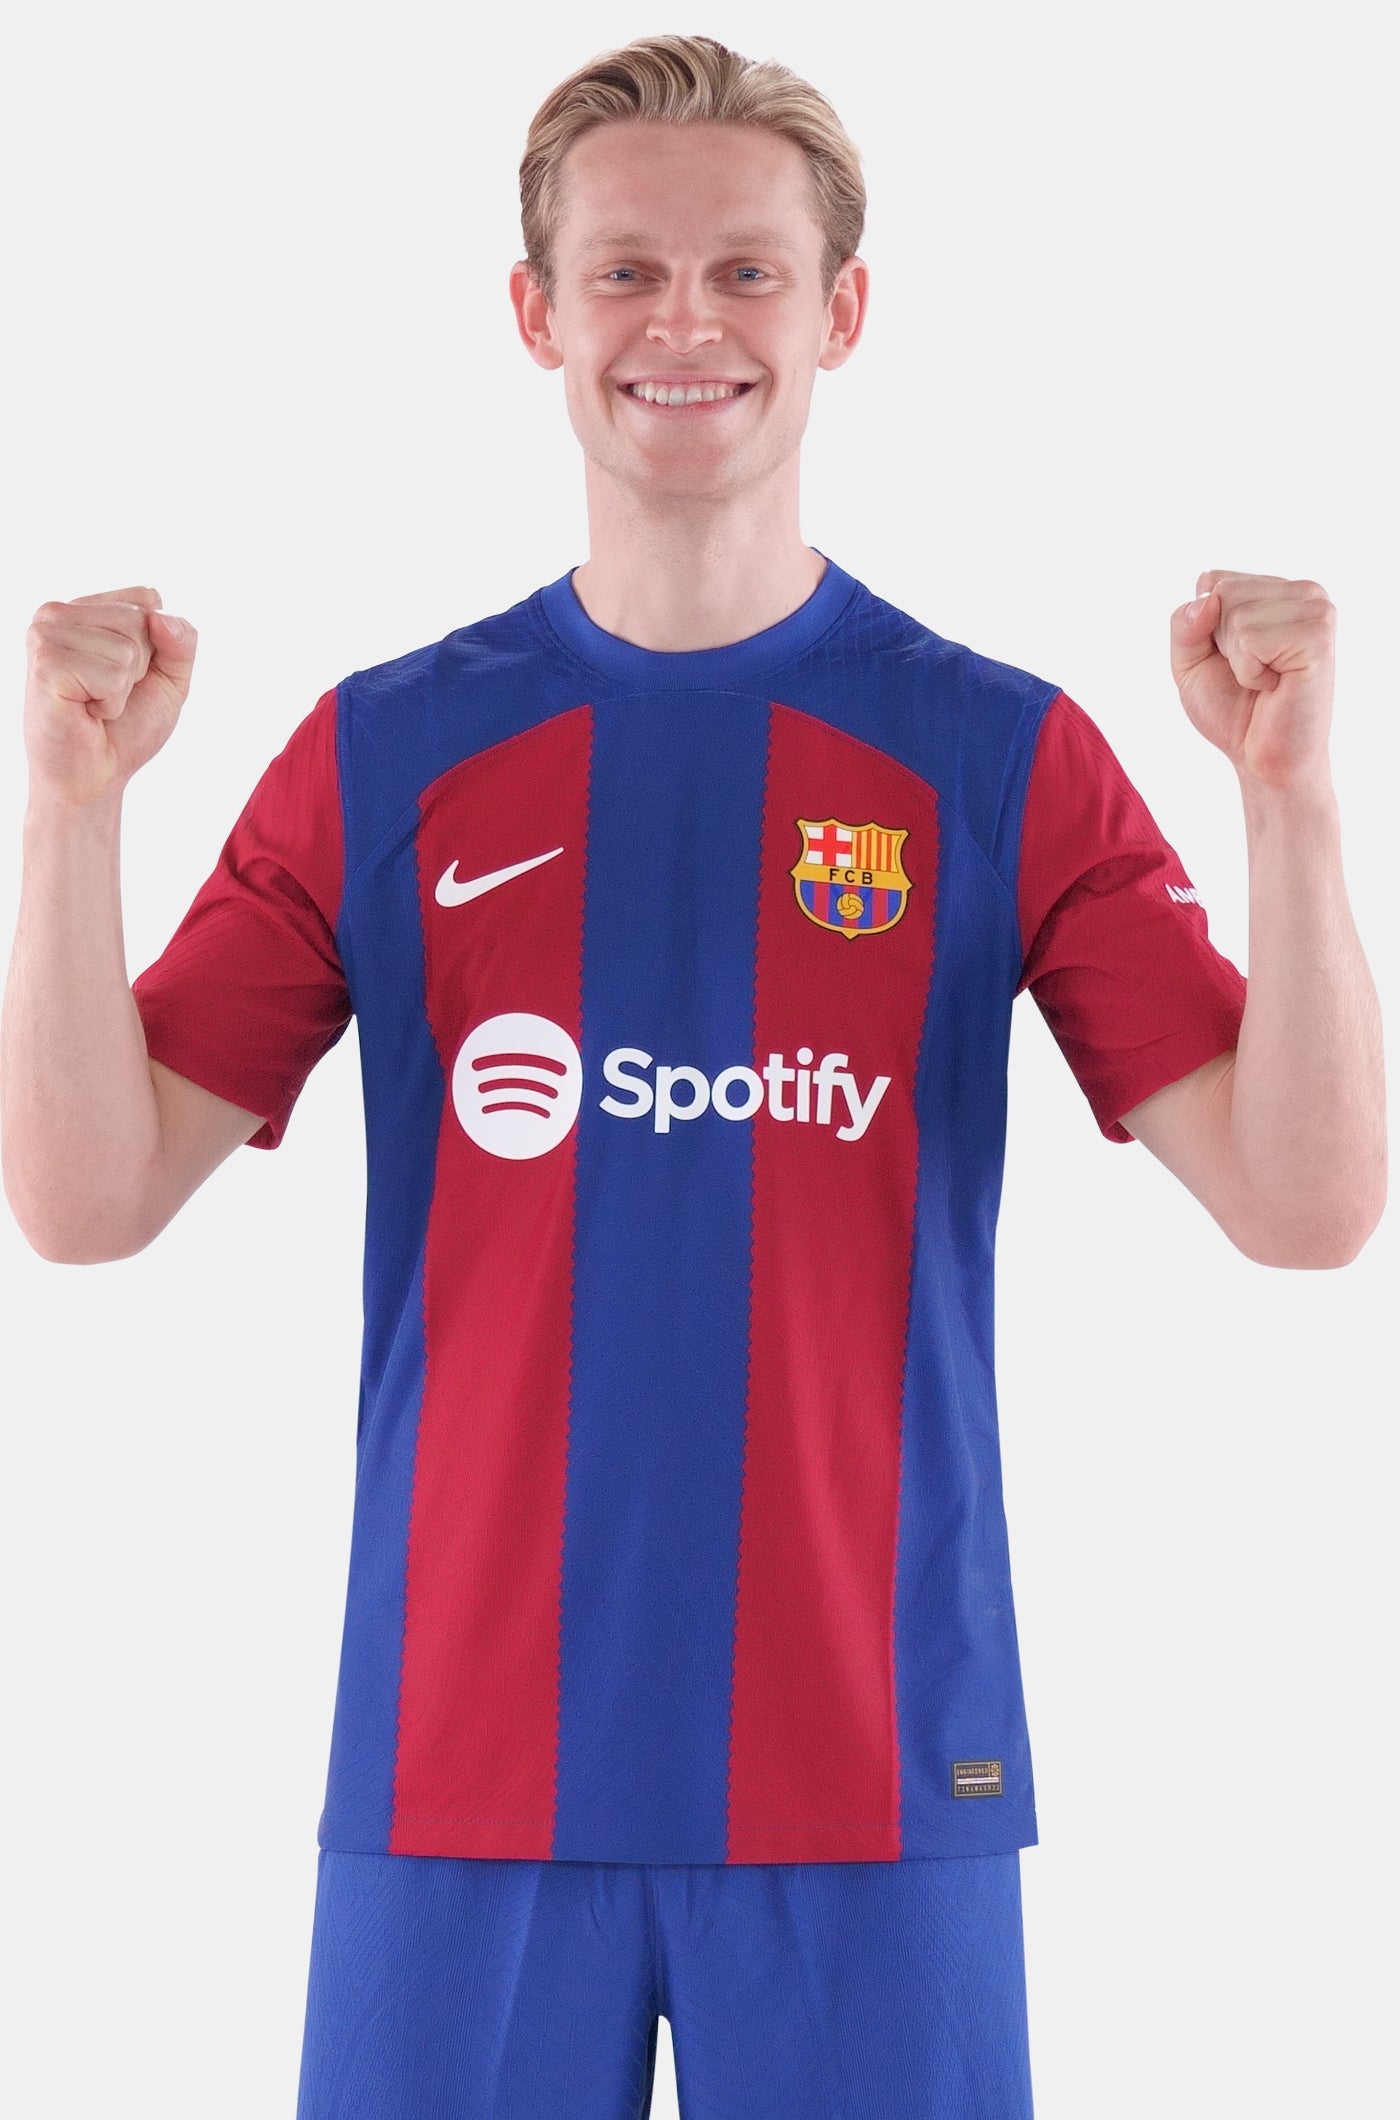 21. F. de Jong – Barça Official Store Spotify Camp Nou